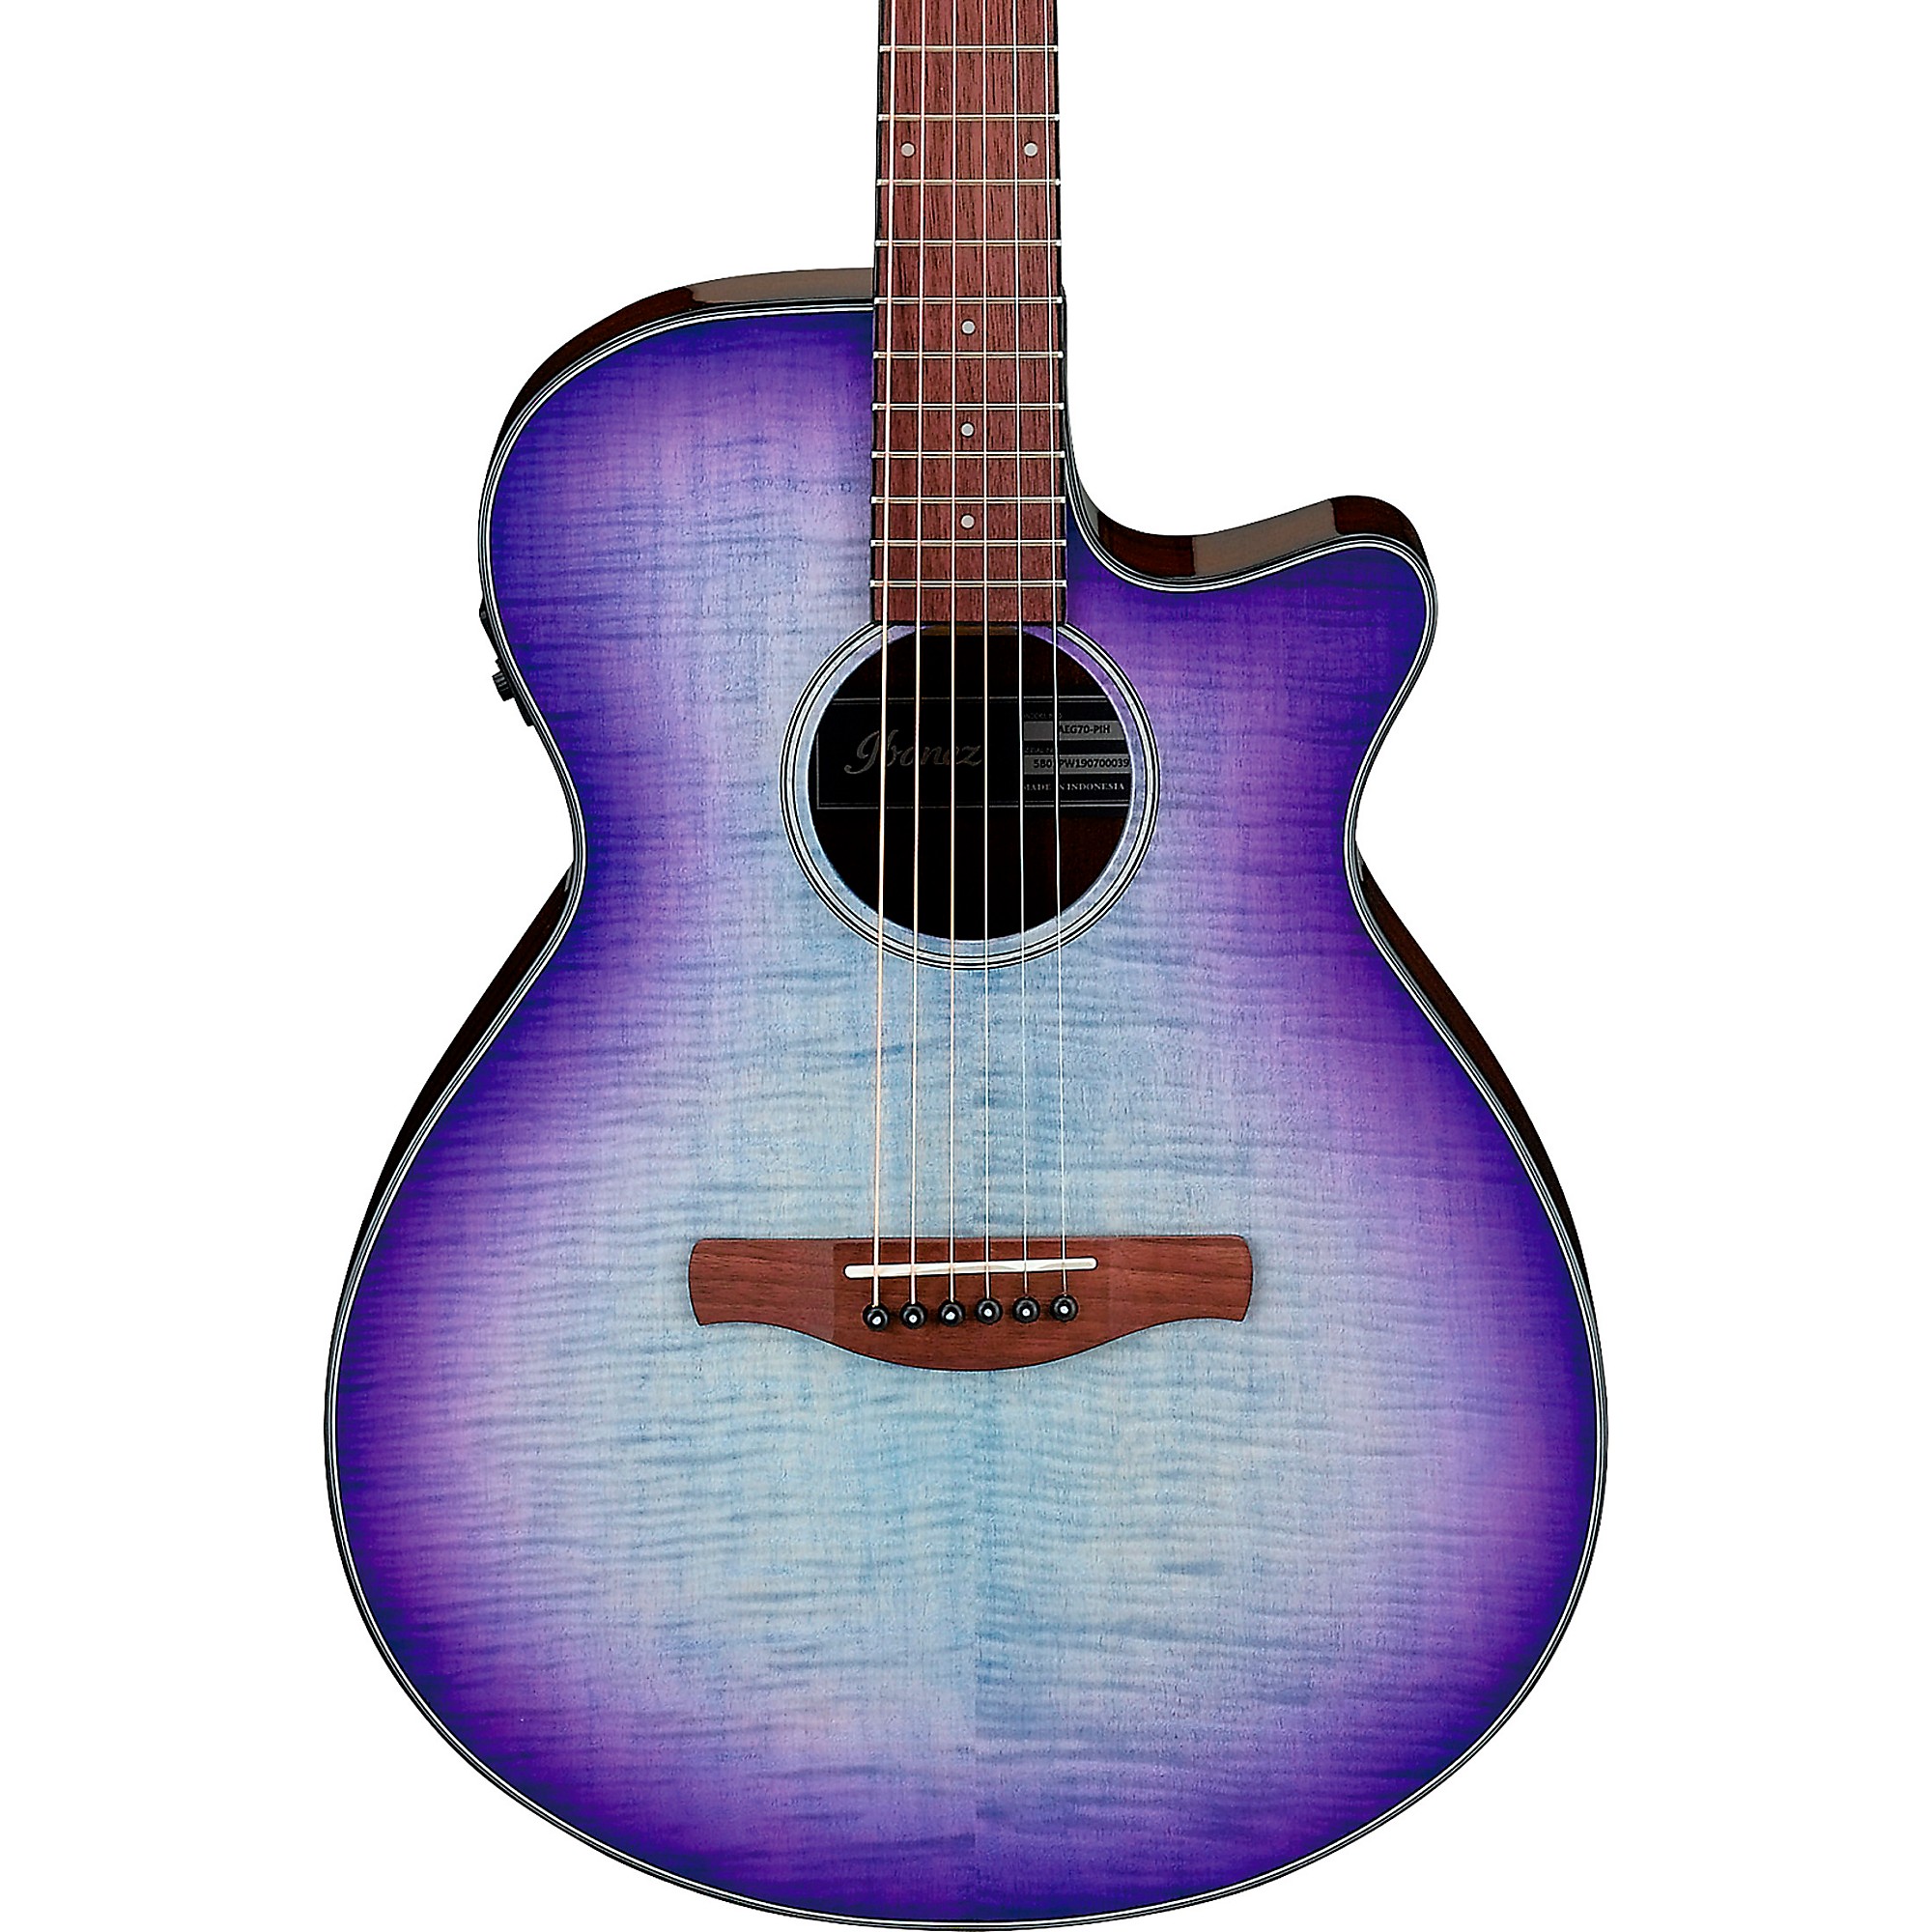 Акустически-электрическая гитара Ibanez AEG70 Flamed Maple Top Grand Concert Purple Iris Burst